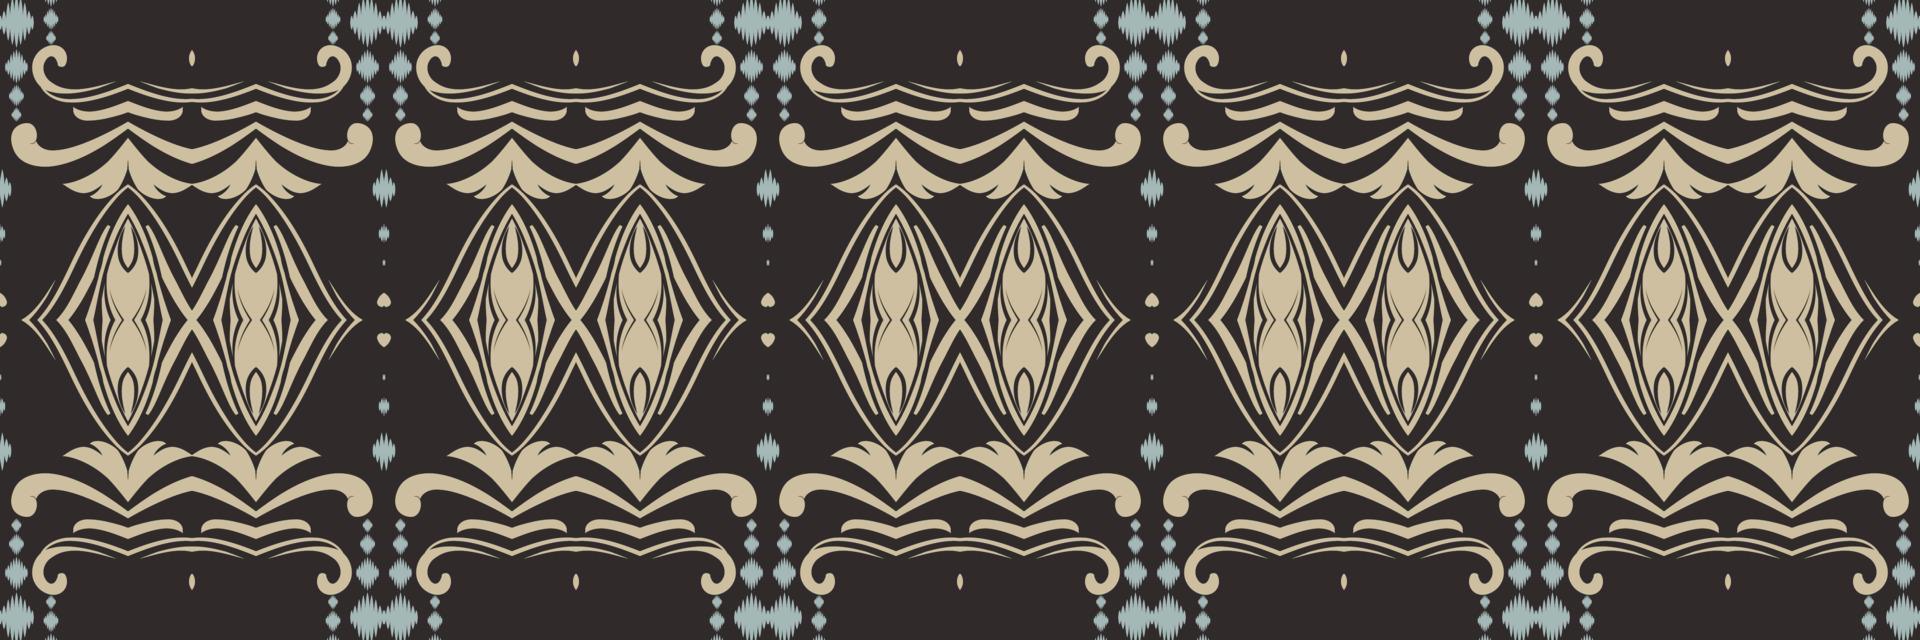 ikat diseña patrones sin fisuras de chevron tribal. étnico geométrico batik ikkat vector digital diseño textil para estampados tela sari mughal cepillo símbolo franjas textura kurti kurtis kurtas